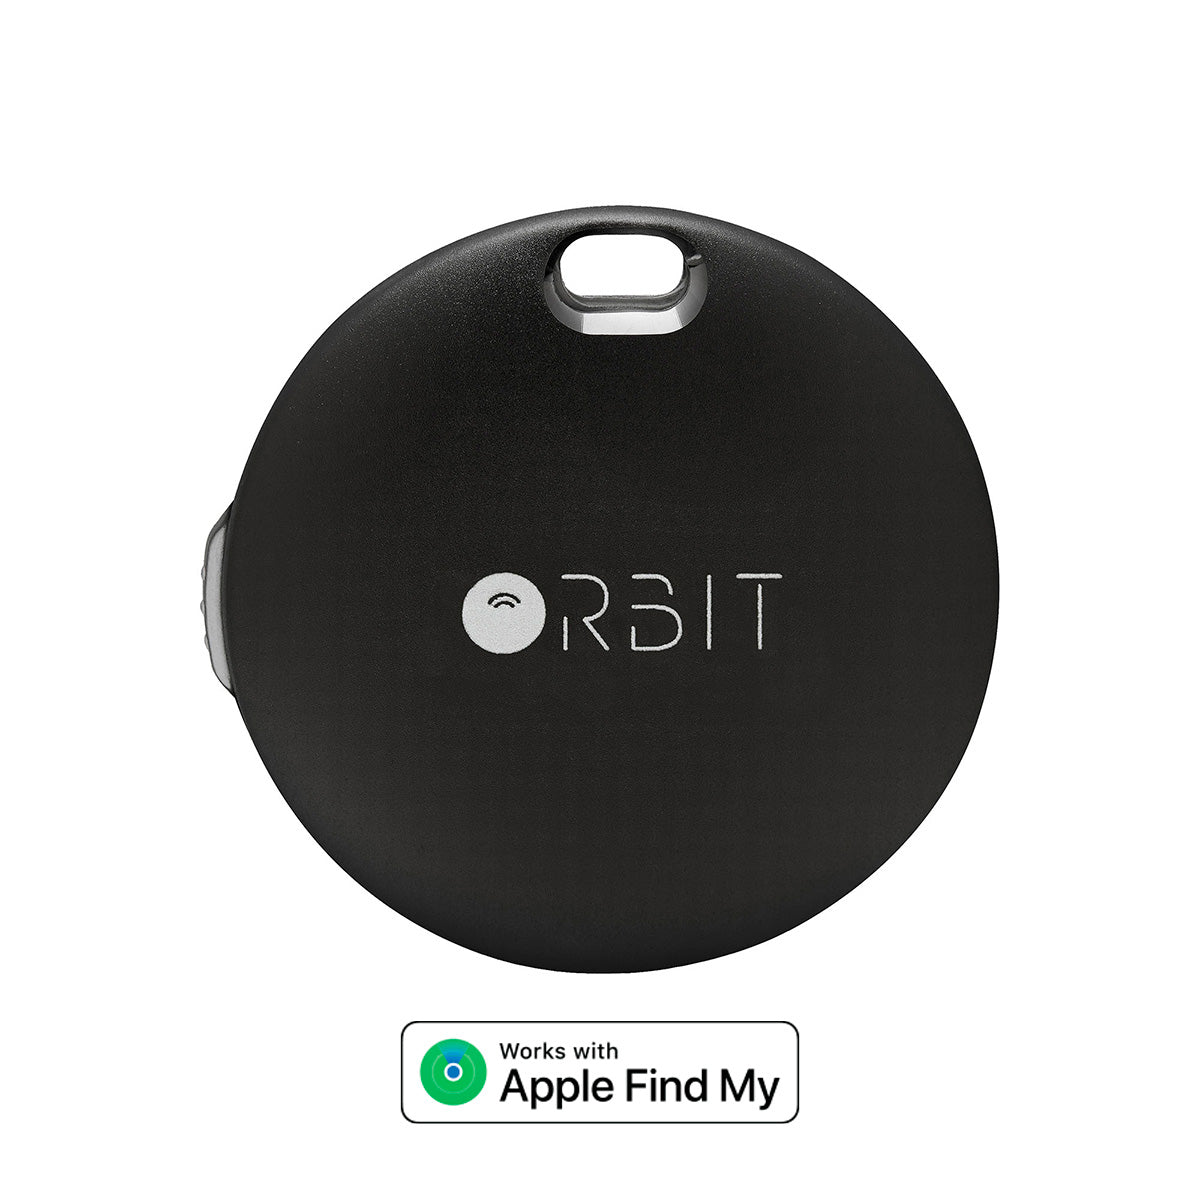 Orbit x Keys (For iOS Only) - Orbit